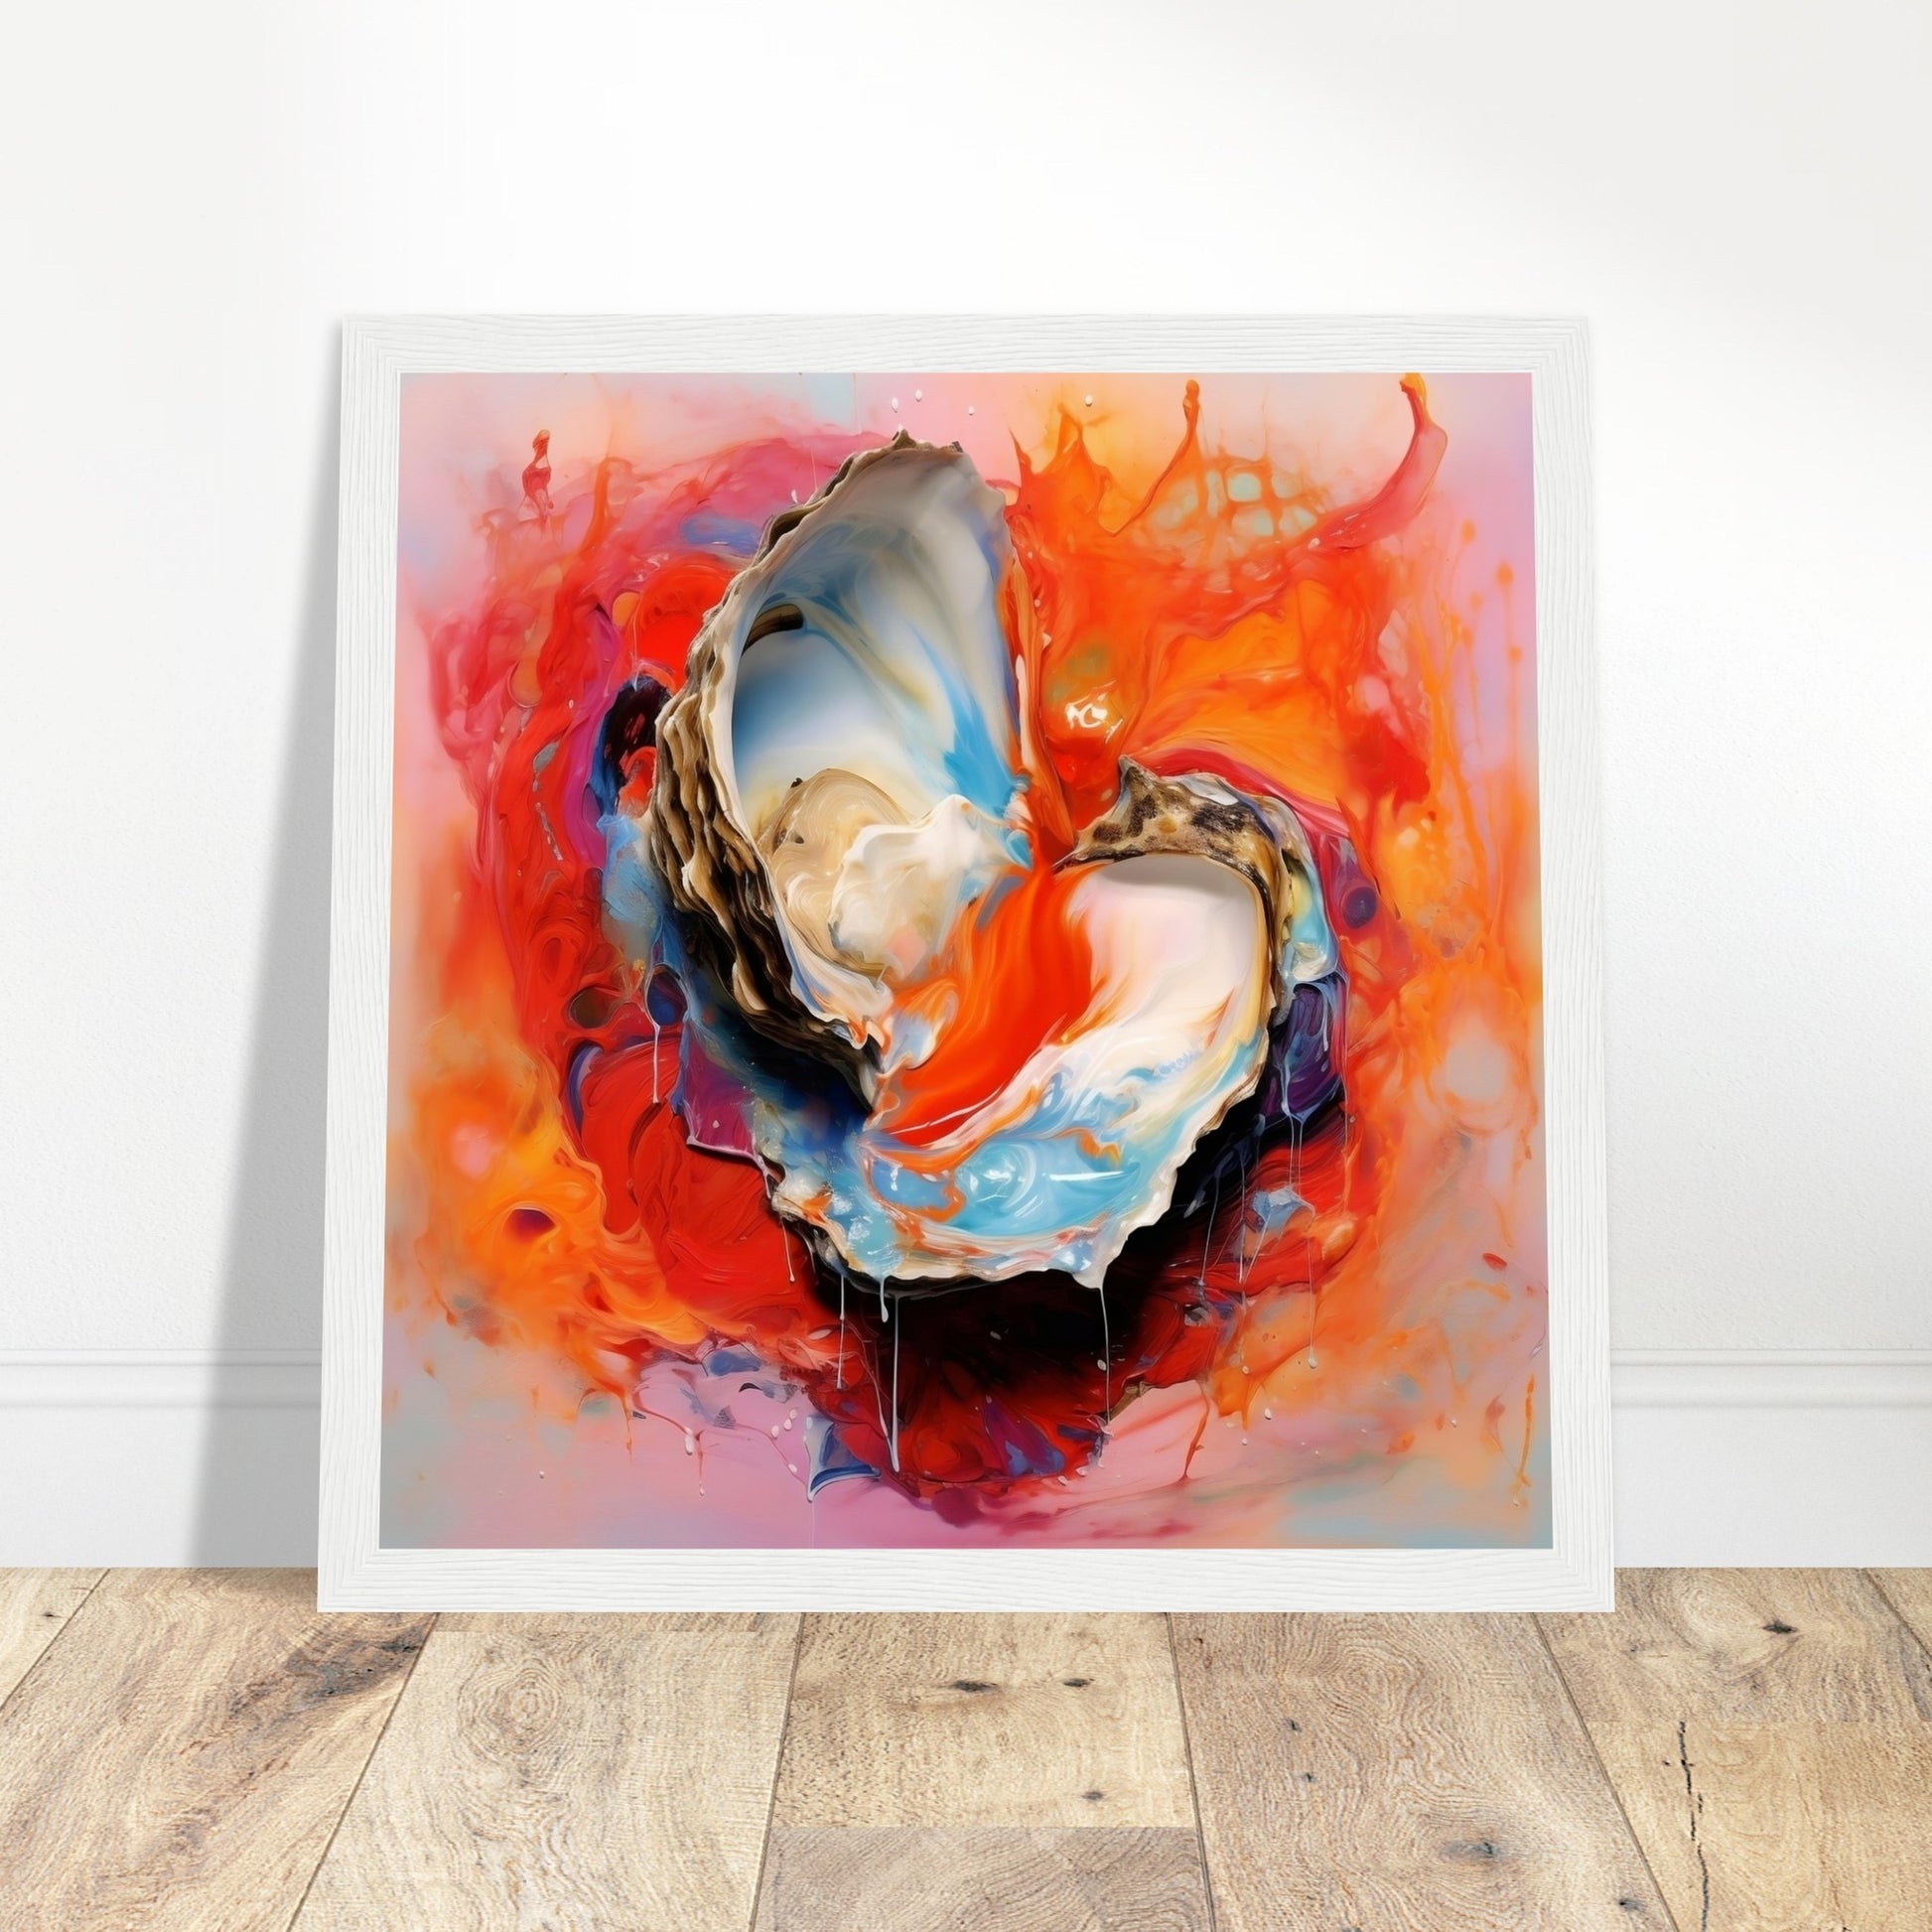 Exclusive Oyster Sea Artwork #5 - Print Room Ltd Wood frame 50x50 cm / 20x20"